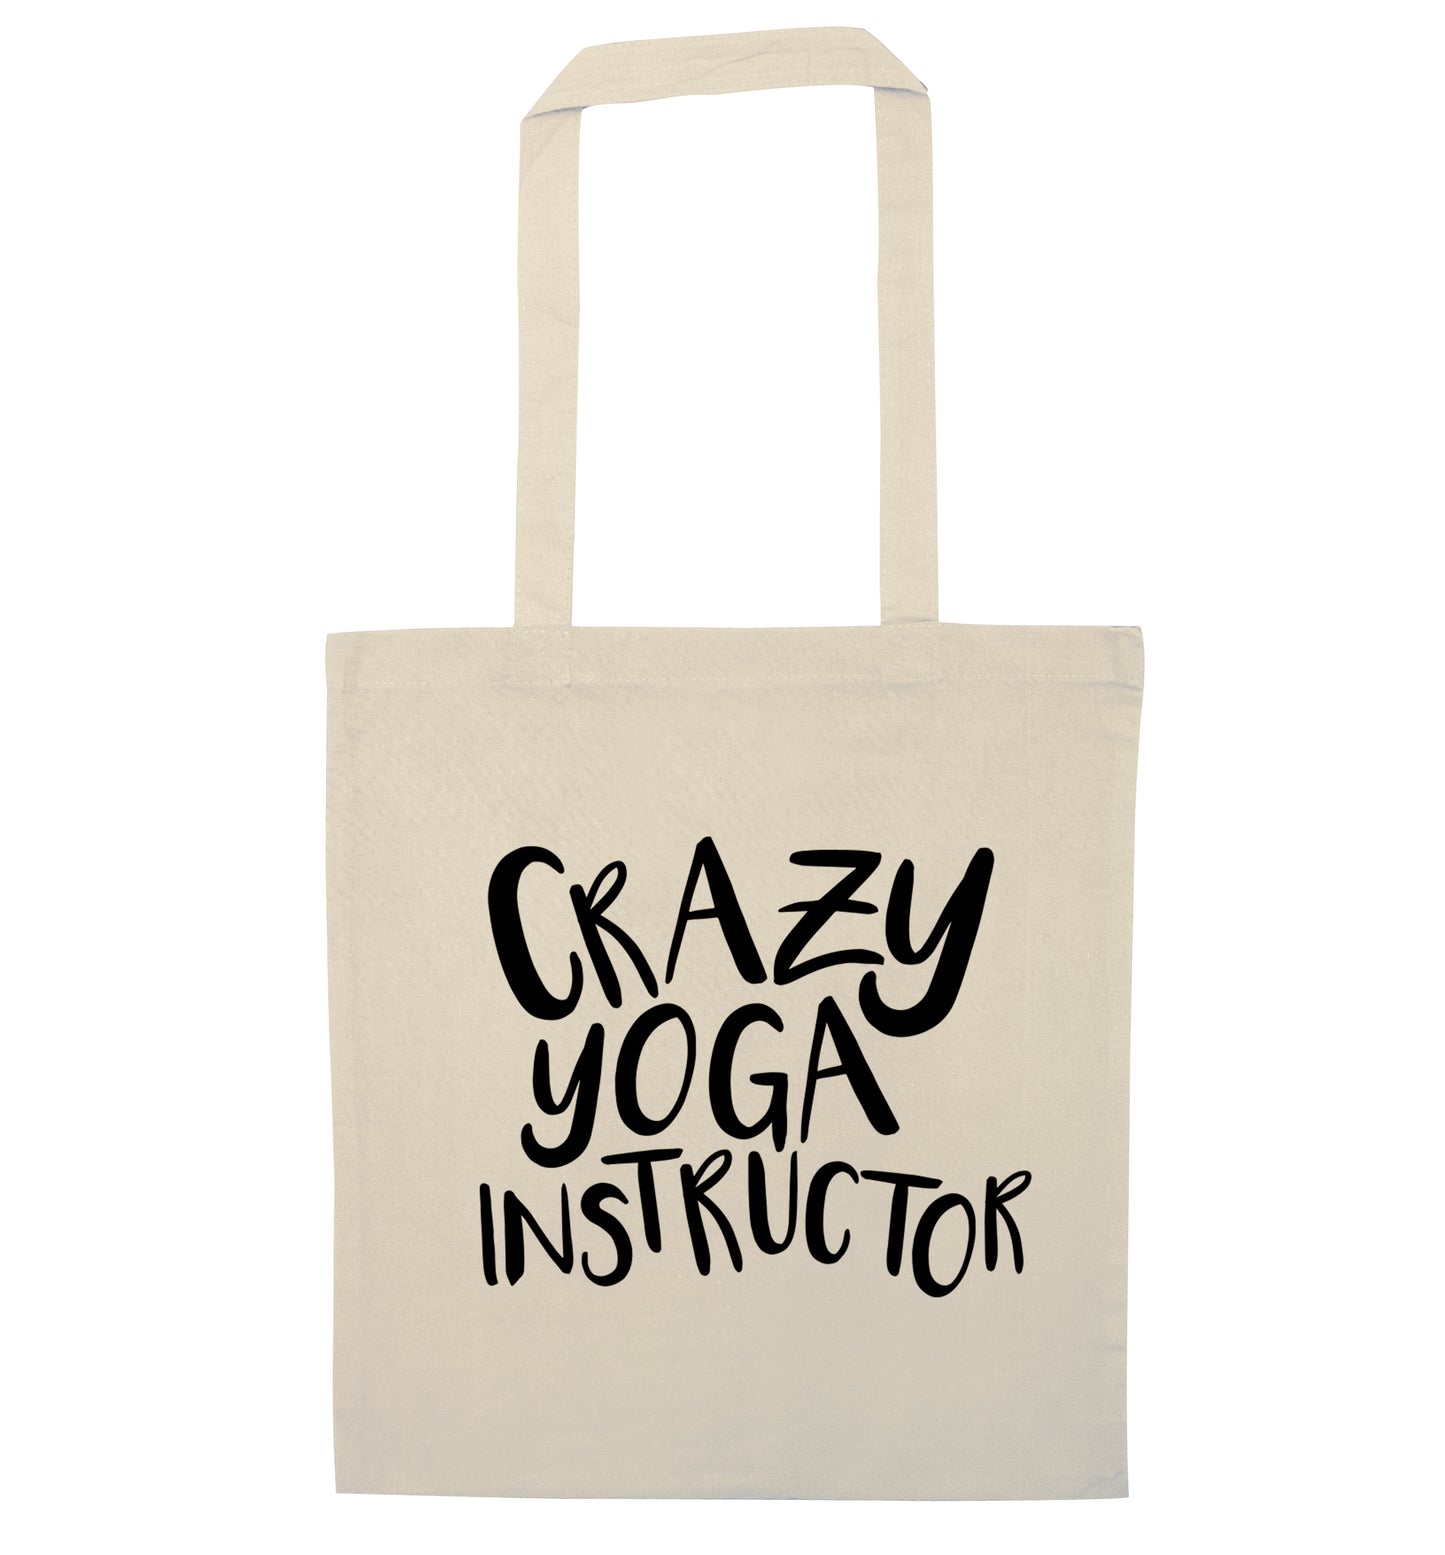 Crazy yoga instructor natural tote bag